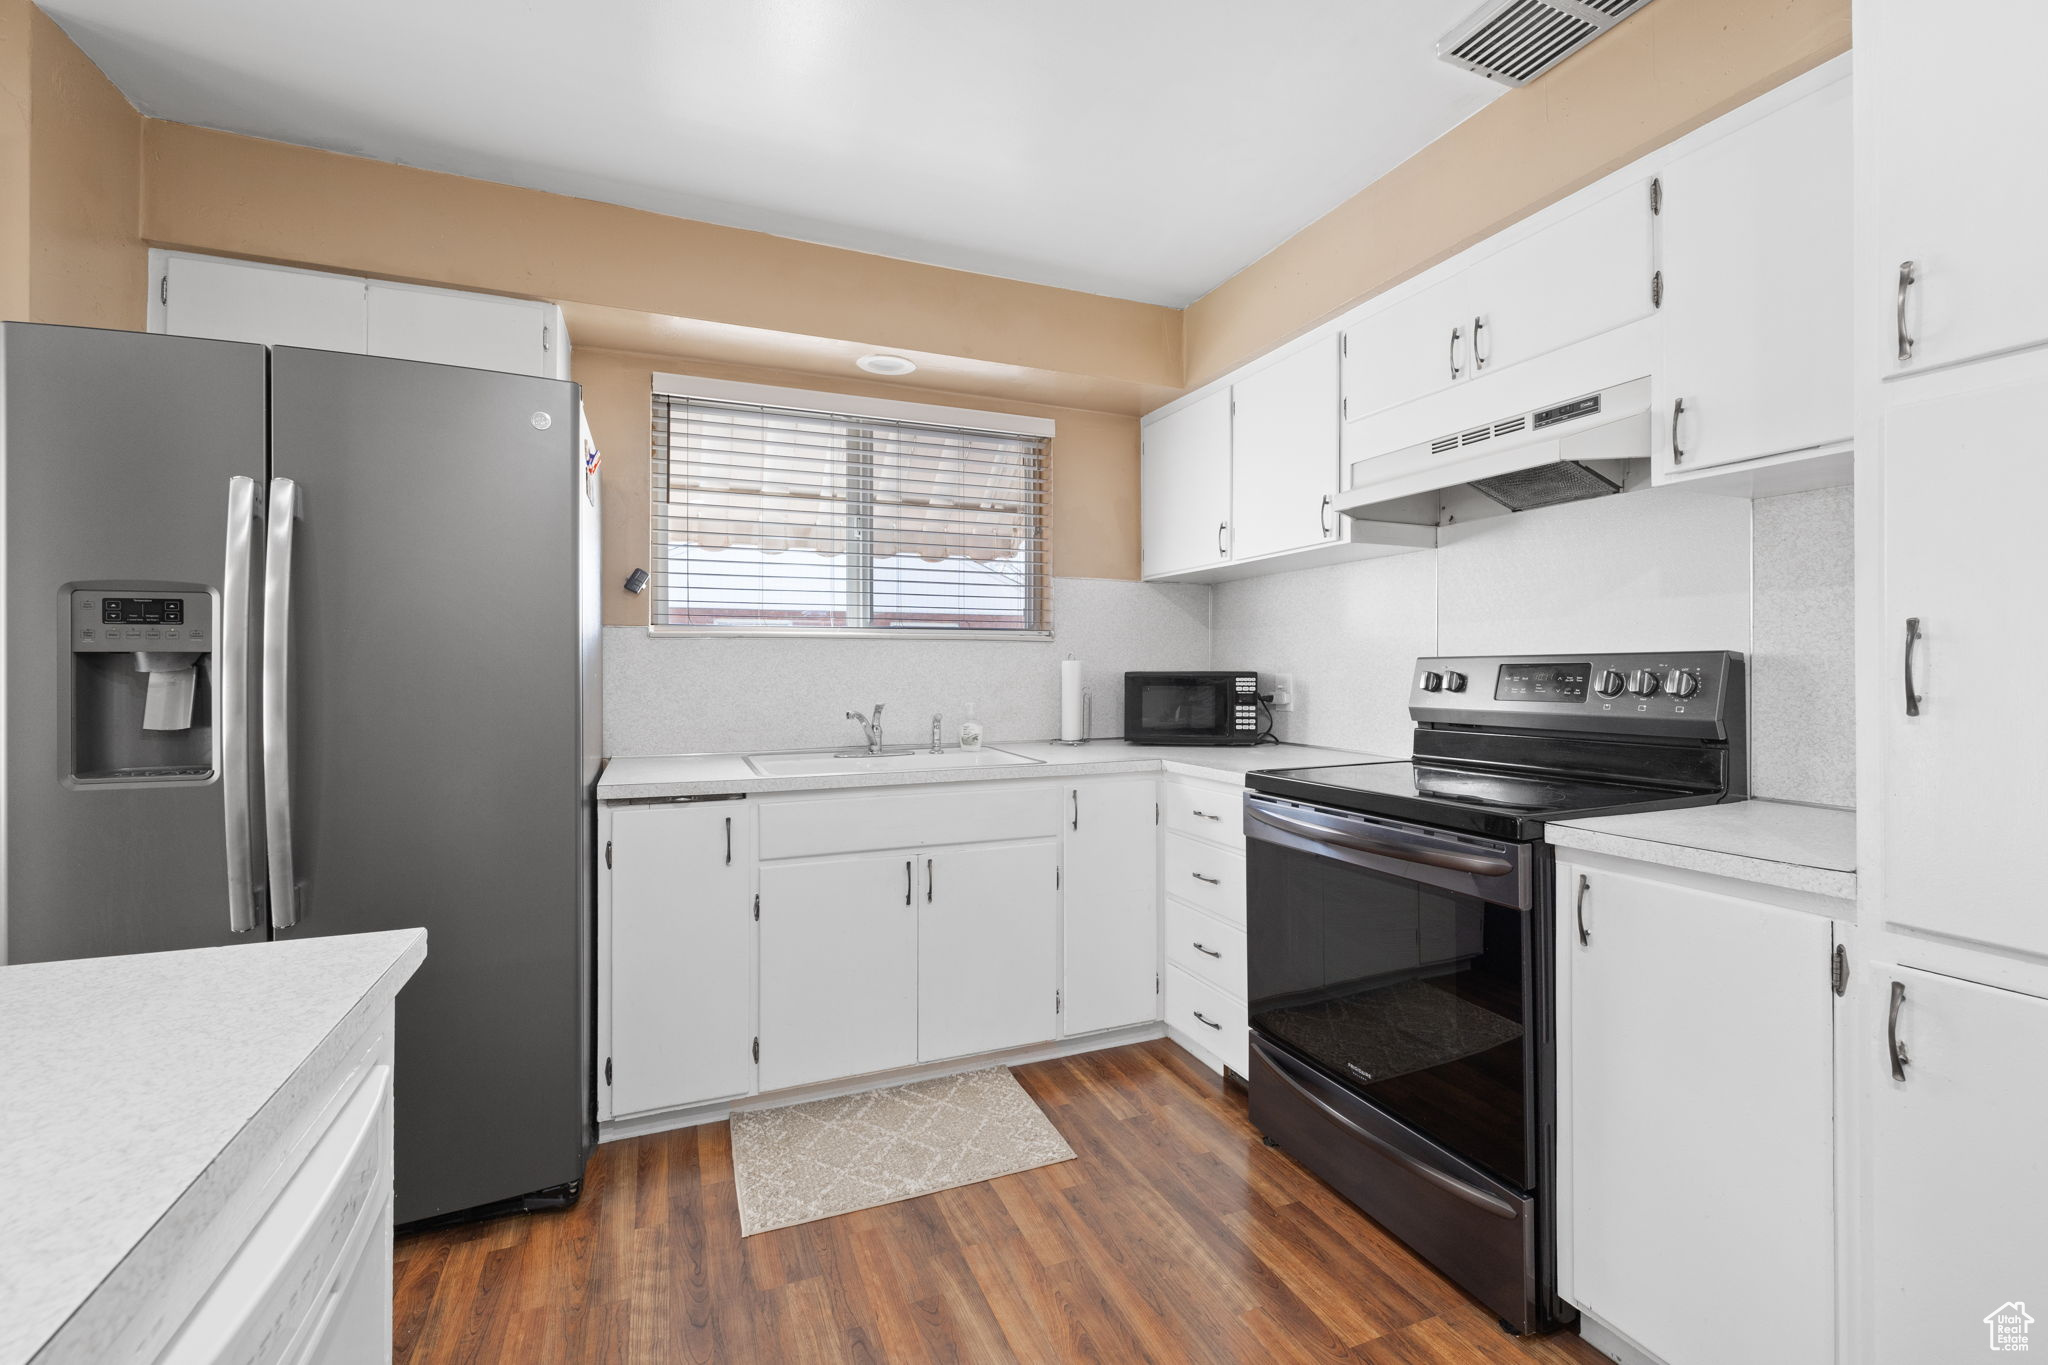 Kitchen with dark hardwood / wood-style floors, sink, backsplash, black appliances, and white cabinetry